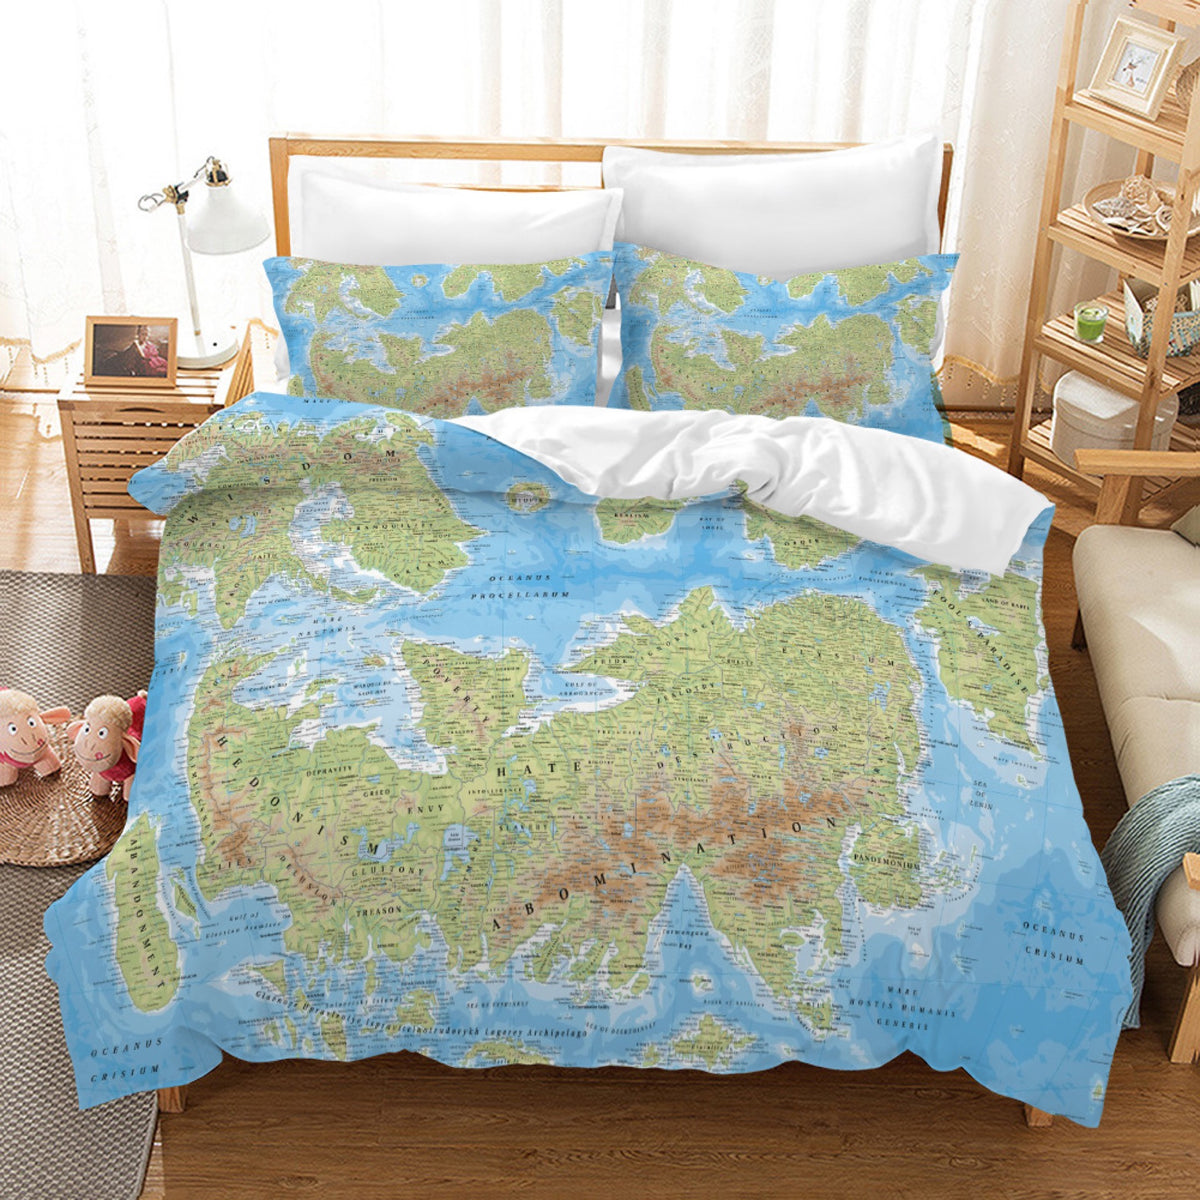 Map of the World #3 Duvet Cover Quilt Cover Pillowcase Bedding Set Bed Linen Home Bedroom Decor